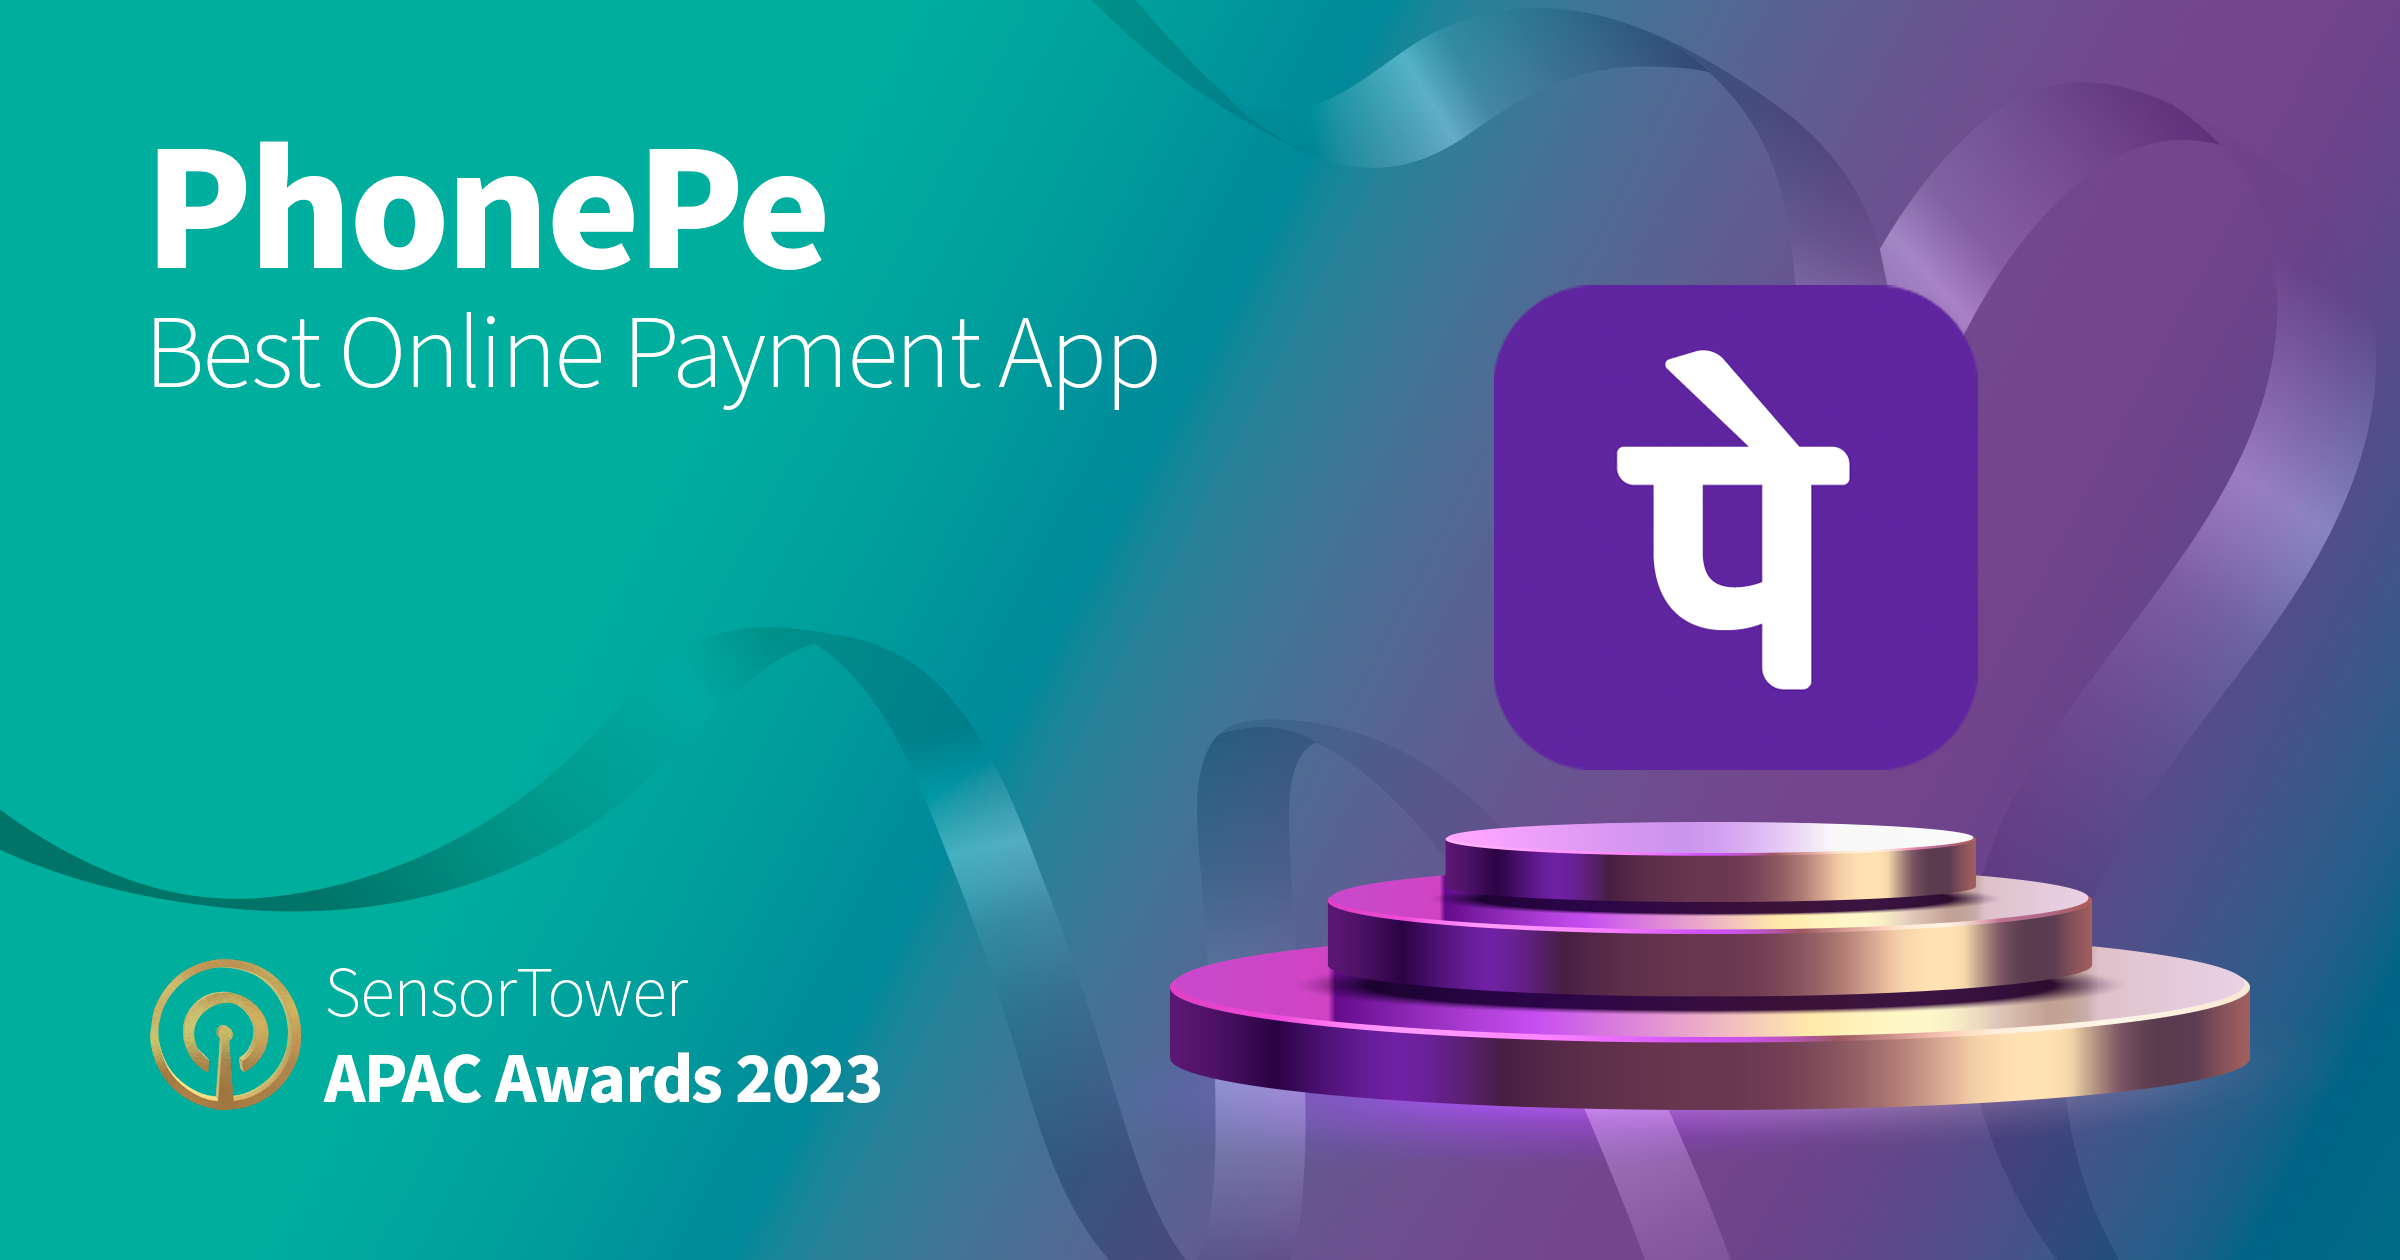 PhonePe (Best Online Payment App)